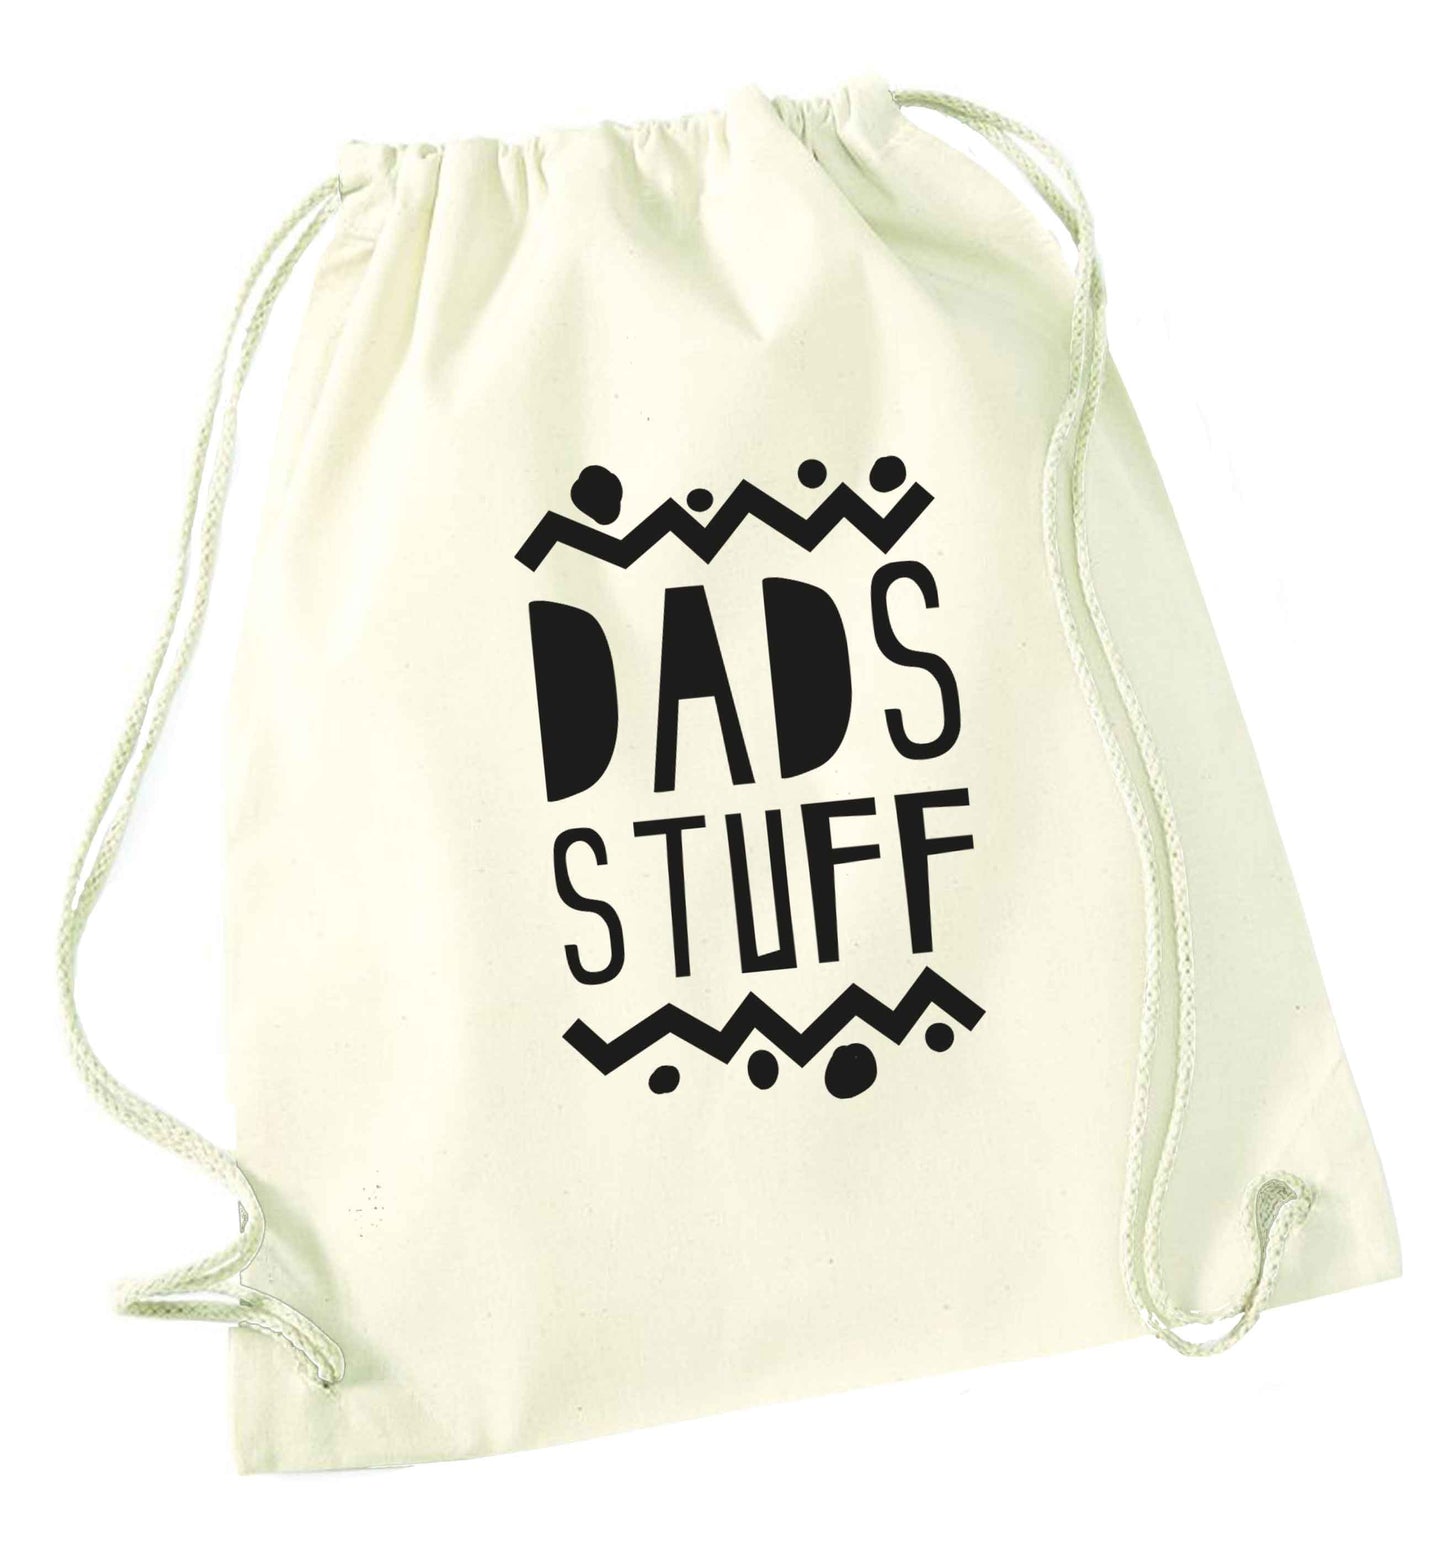 Dads stuff natural drawstring bag